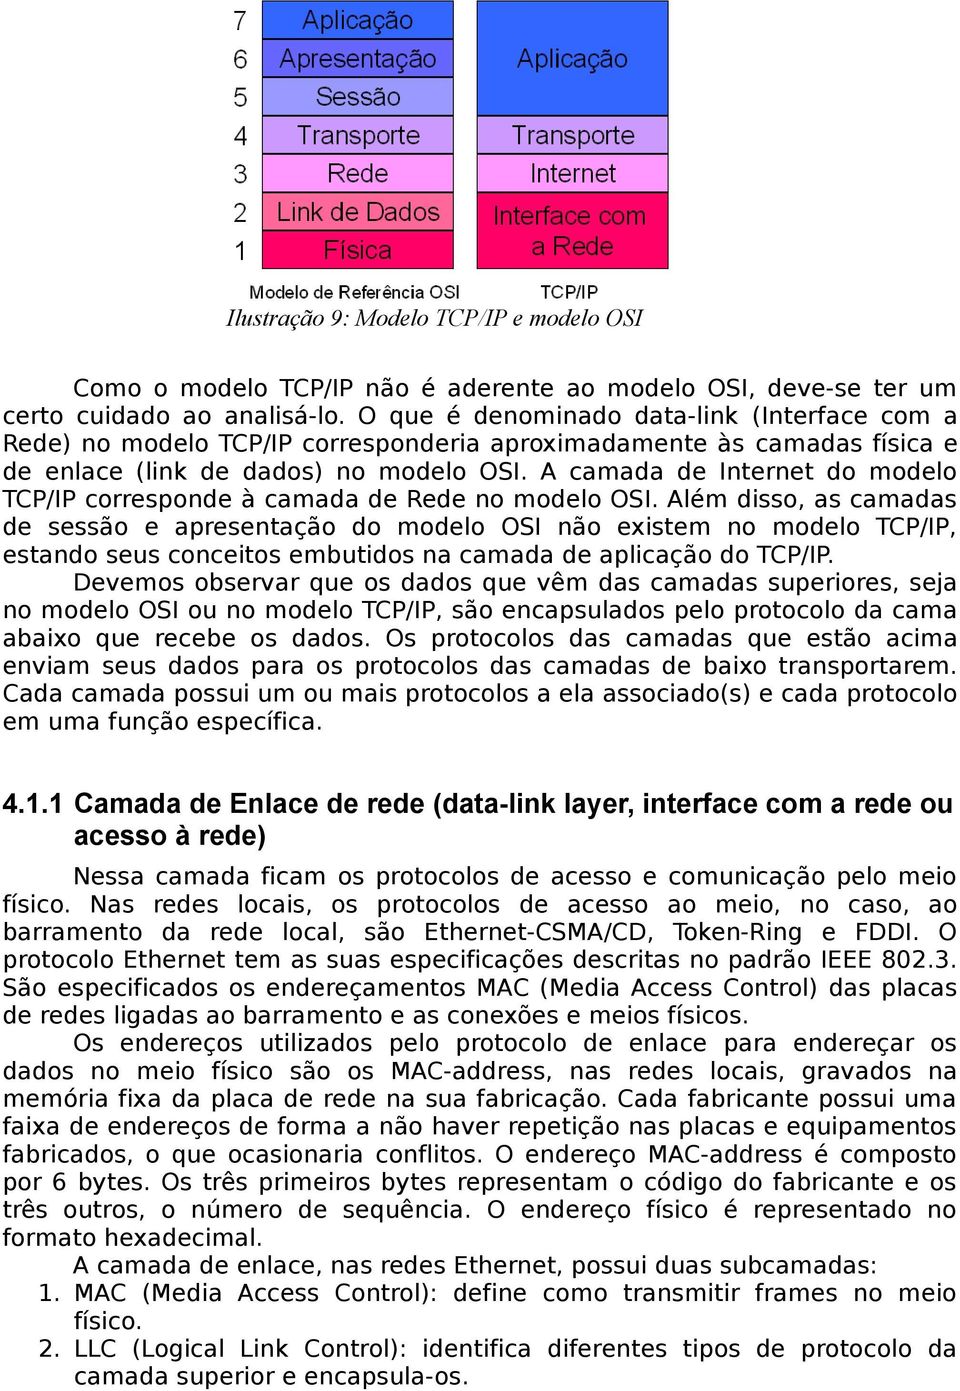 A camada de Internet do modelo TCP/IP corresponde à camada de Rede no modelo OSI.